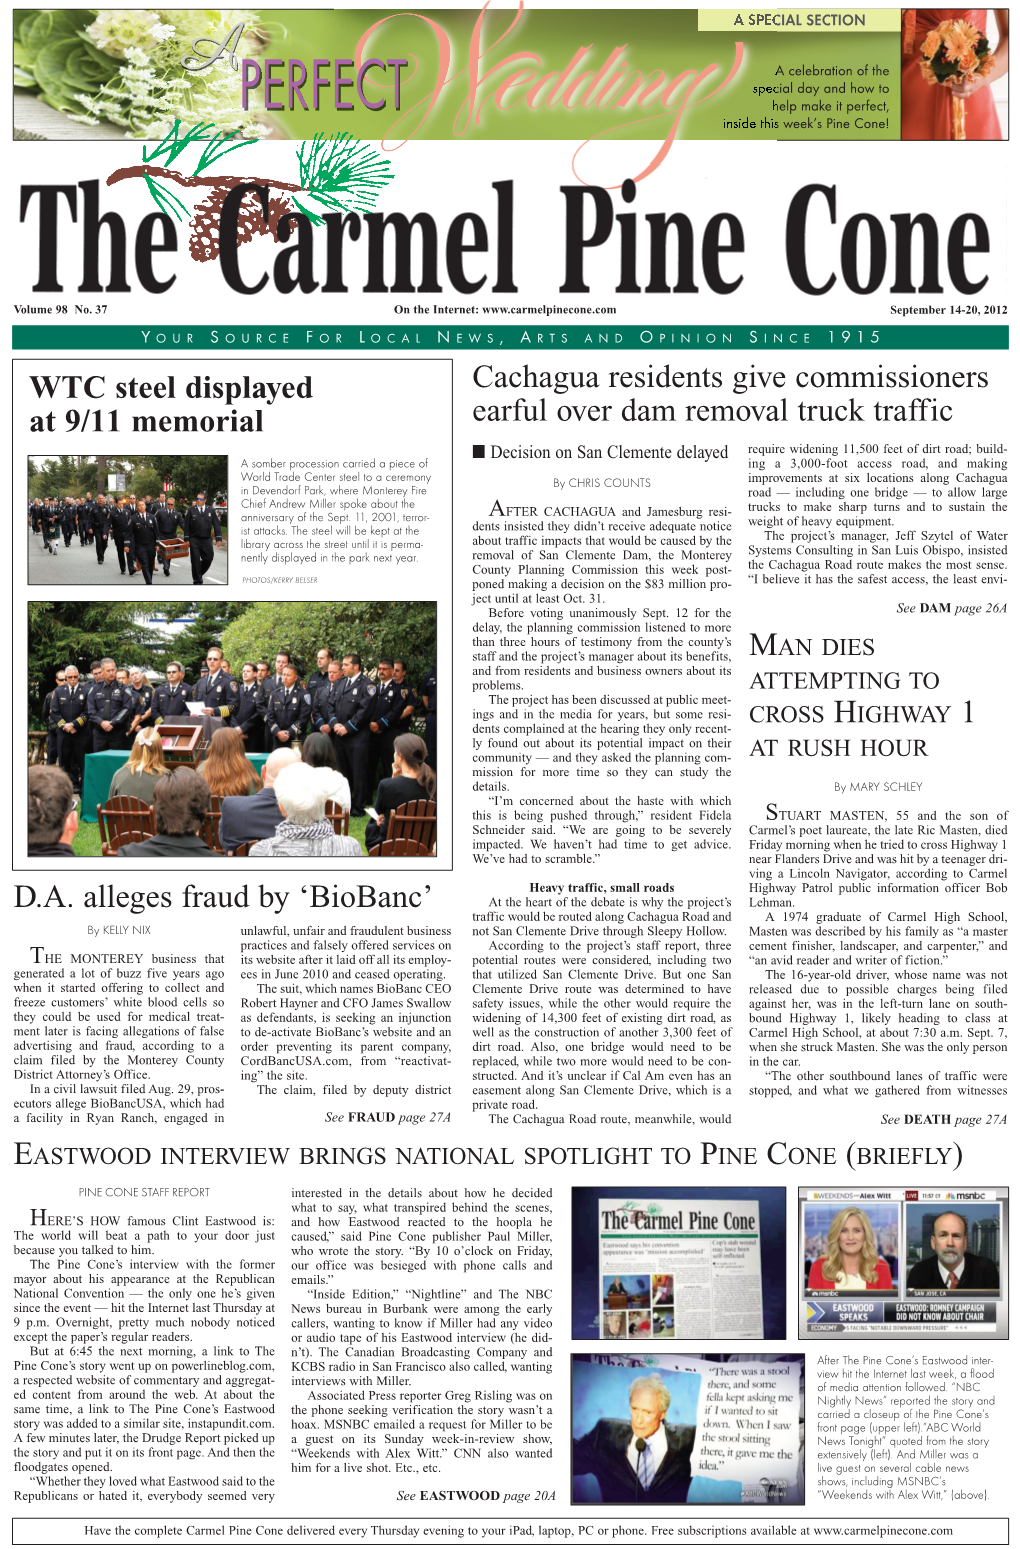 Carmel Pine Cone, September 14, 2012 (Main News)